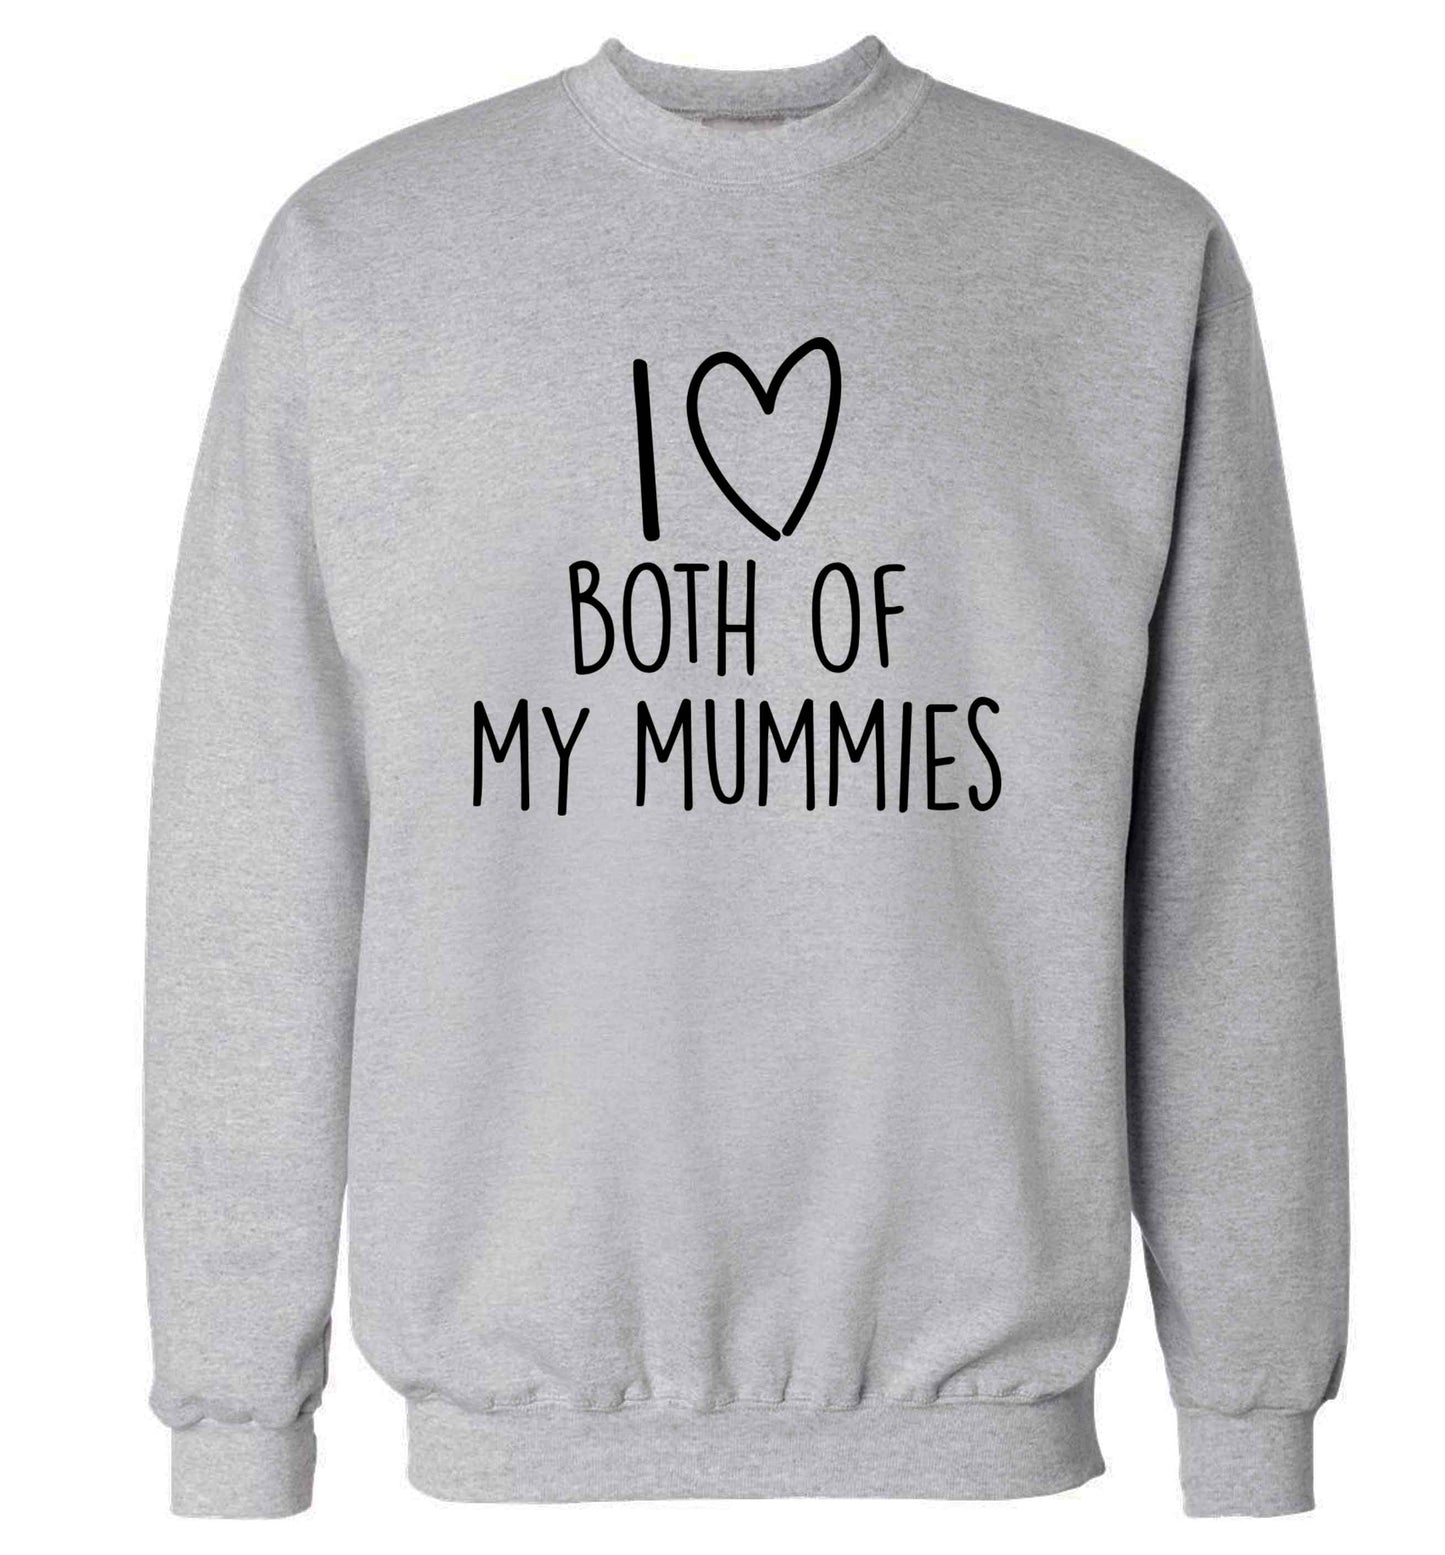 I love both of my mummies adult's unisex grey sweater 2XL